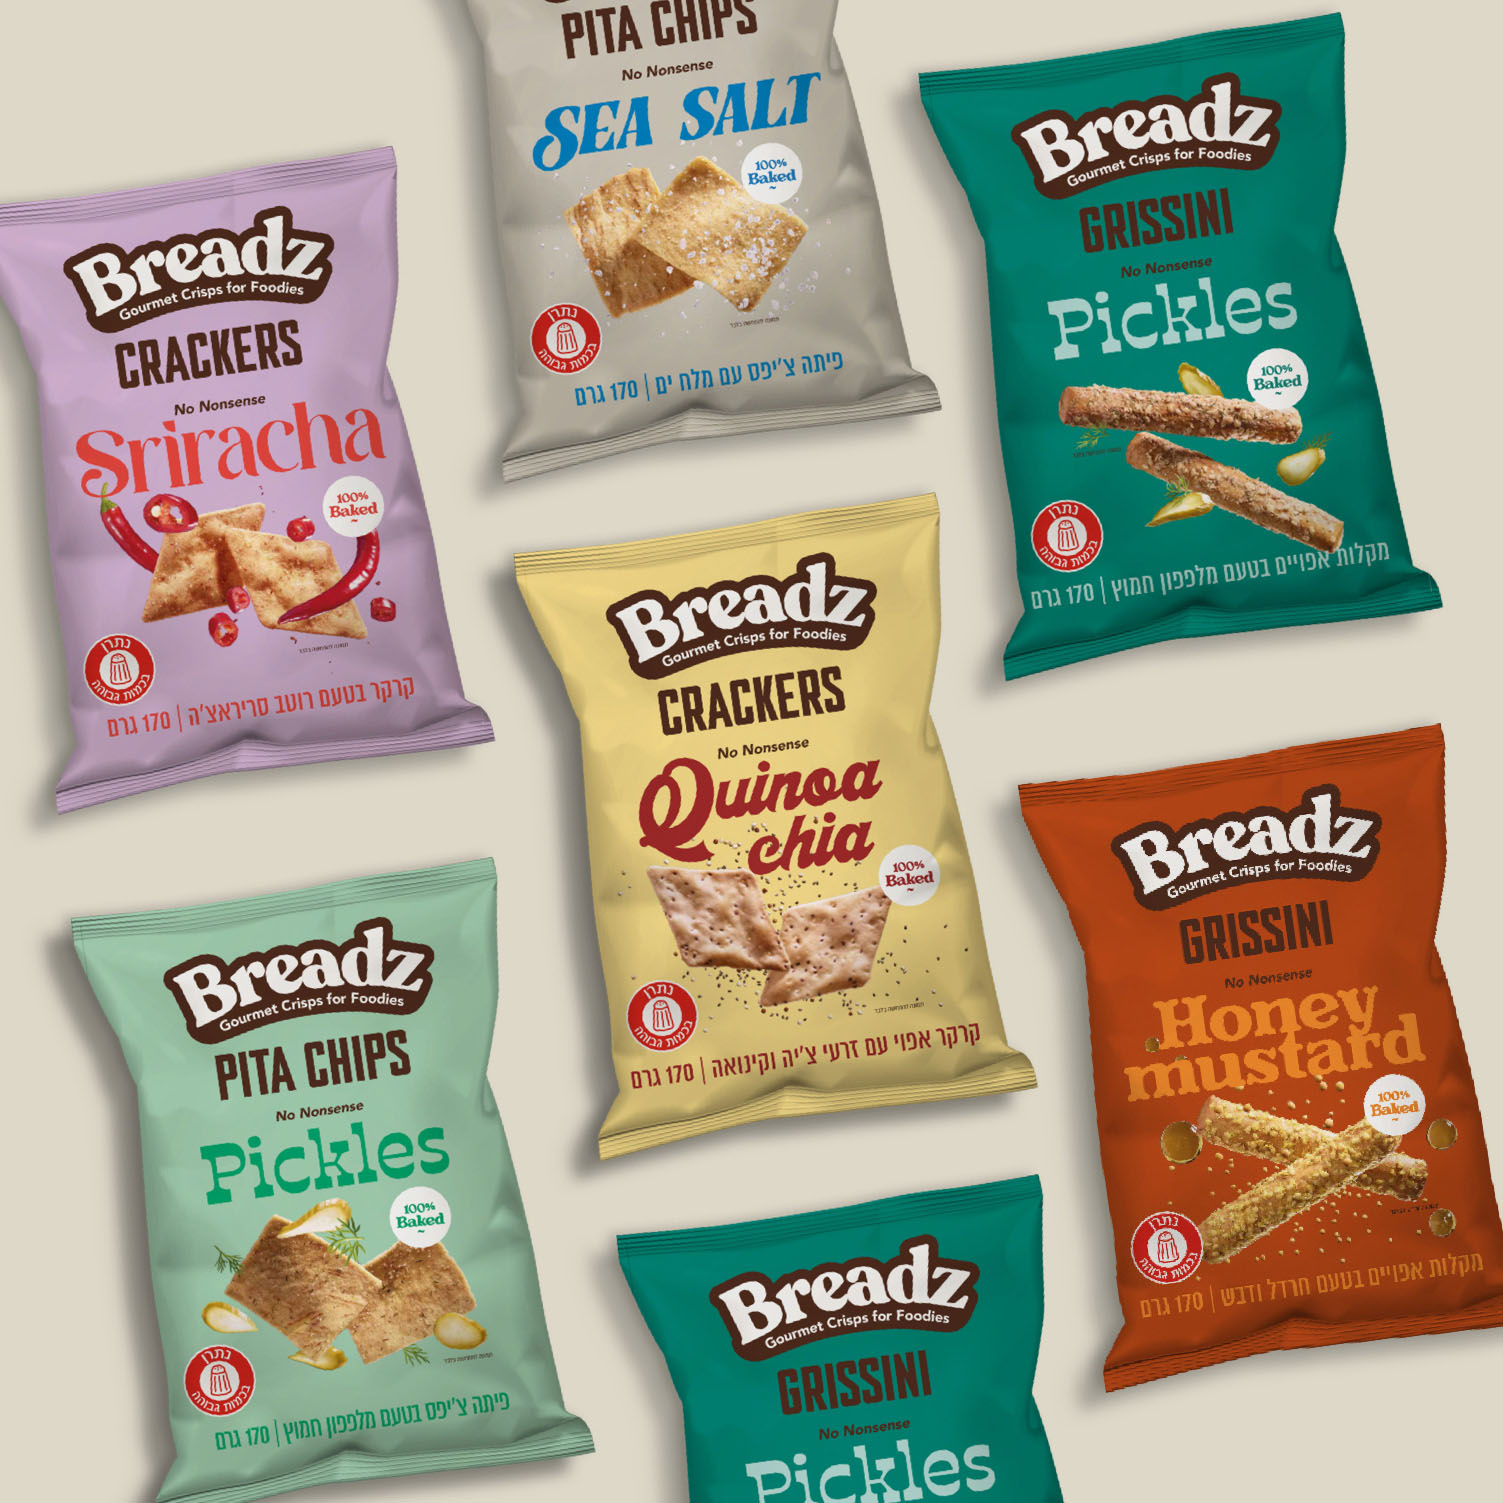 Breadz Gourmet Crisps for Foodies Packaging Design